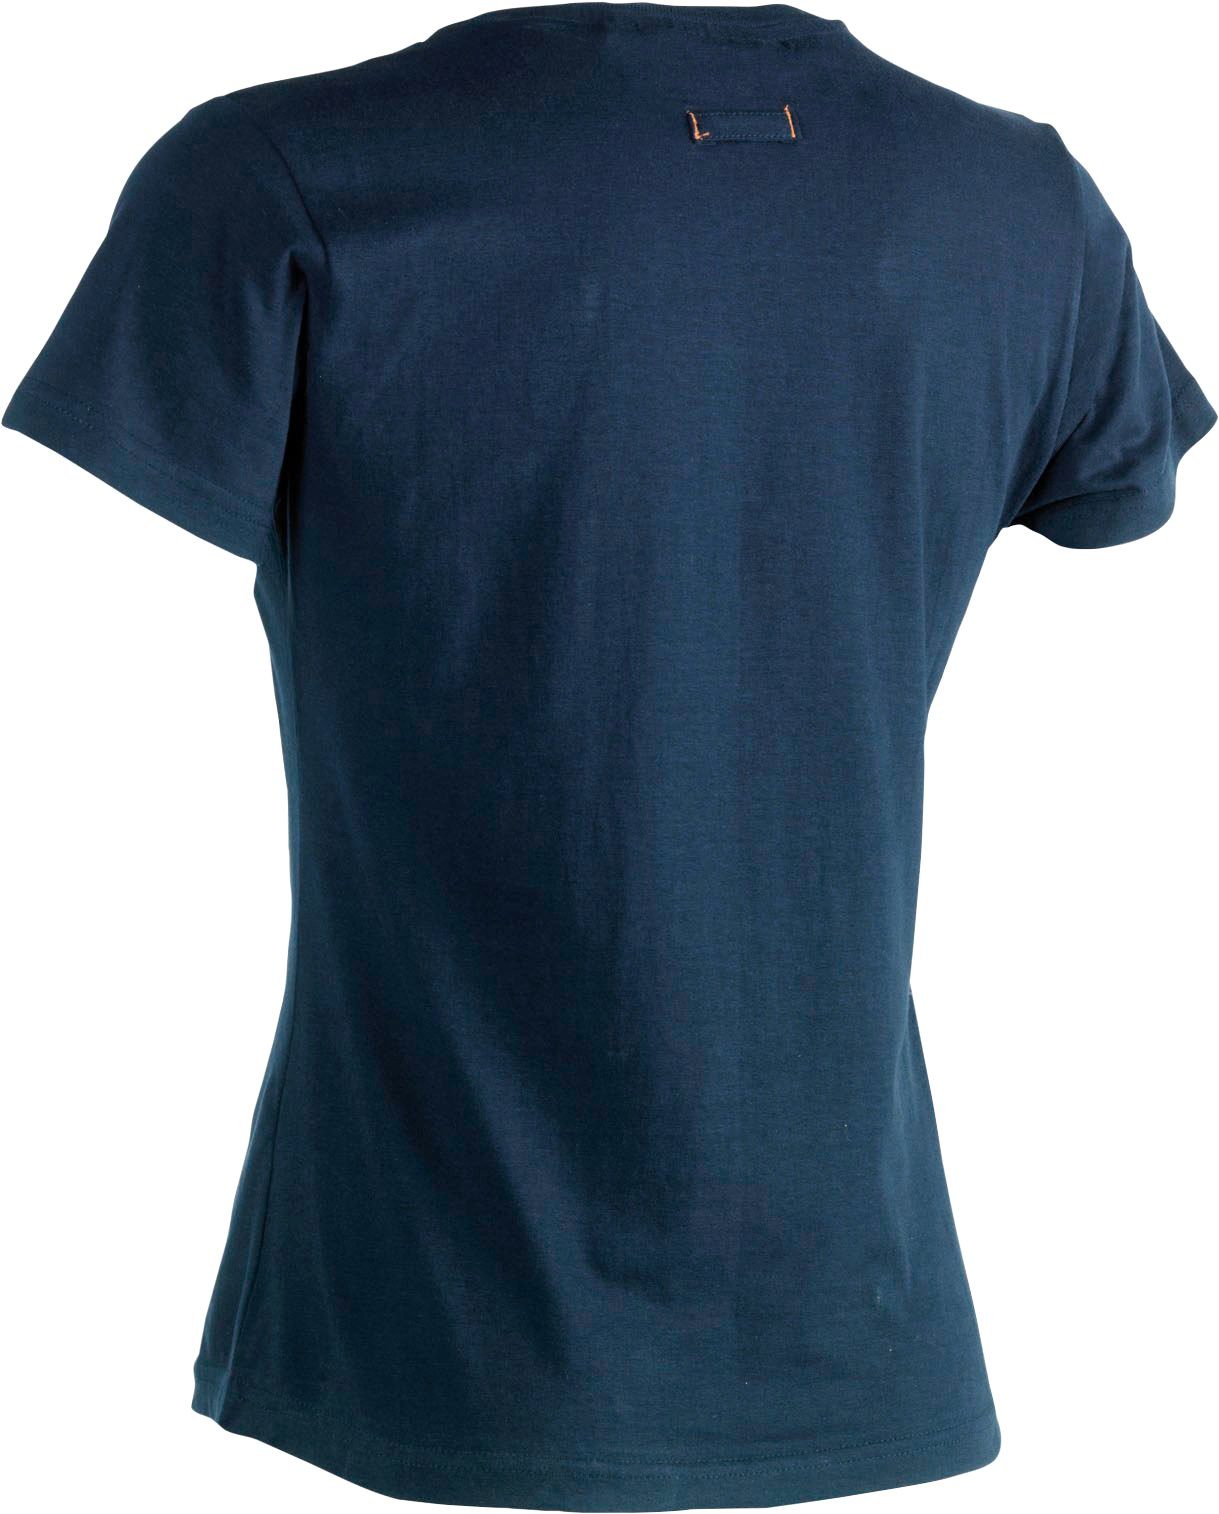 Schlaufe, Damen 1 hintere Figurbetont, angenehmes Epona T-Shirt marine T-Shirt Kurzärmlig Tragegefühl Herock